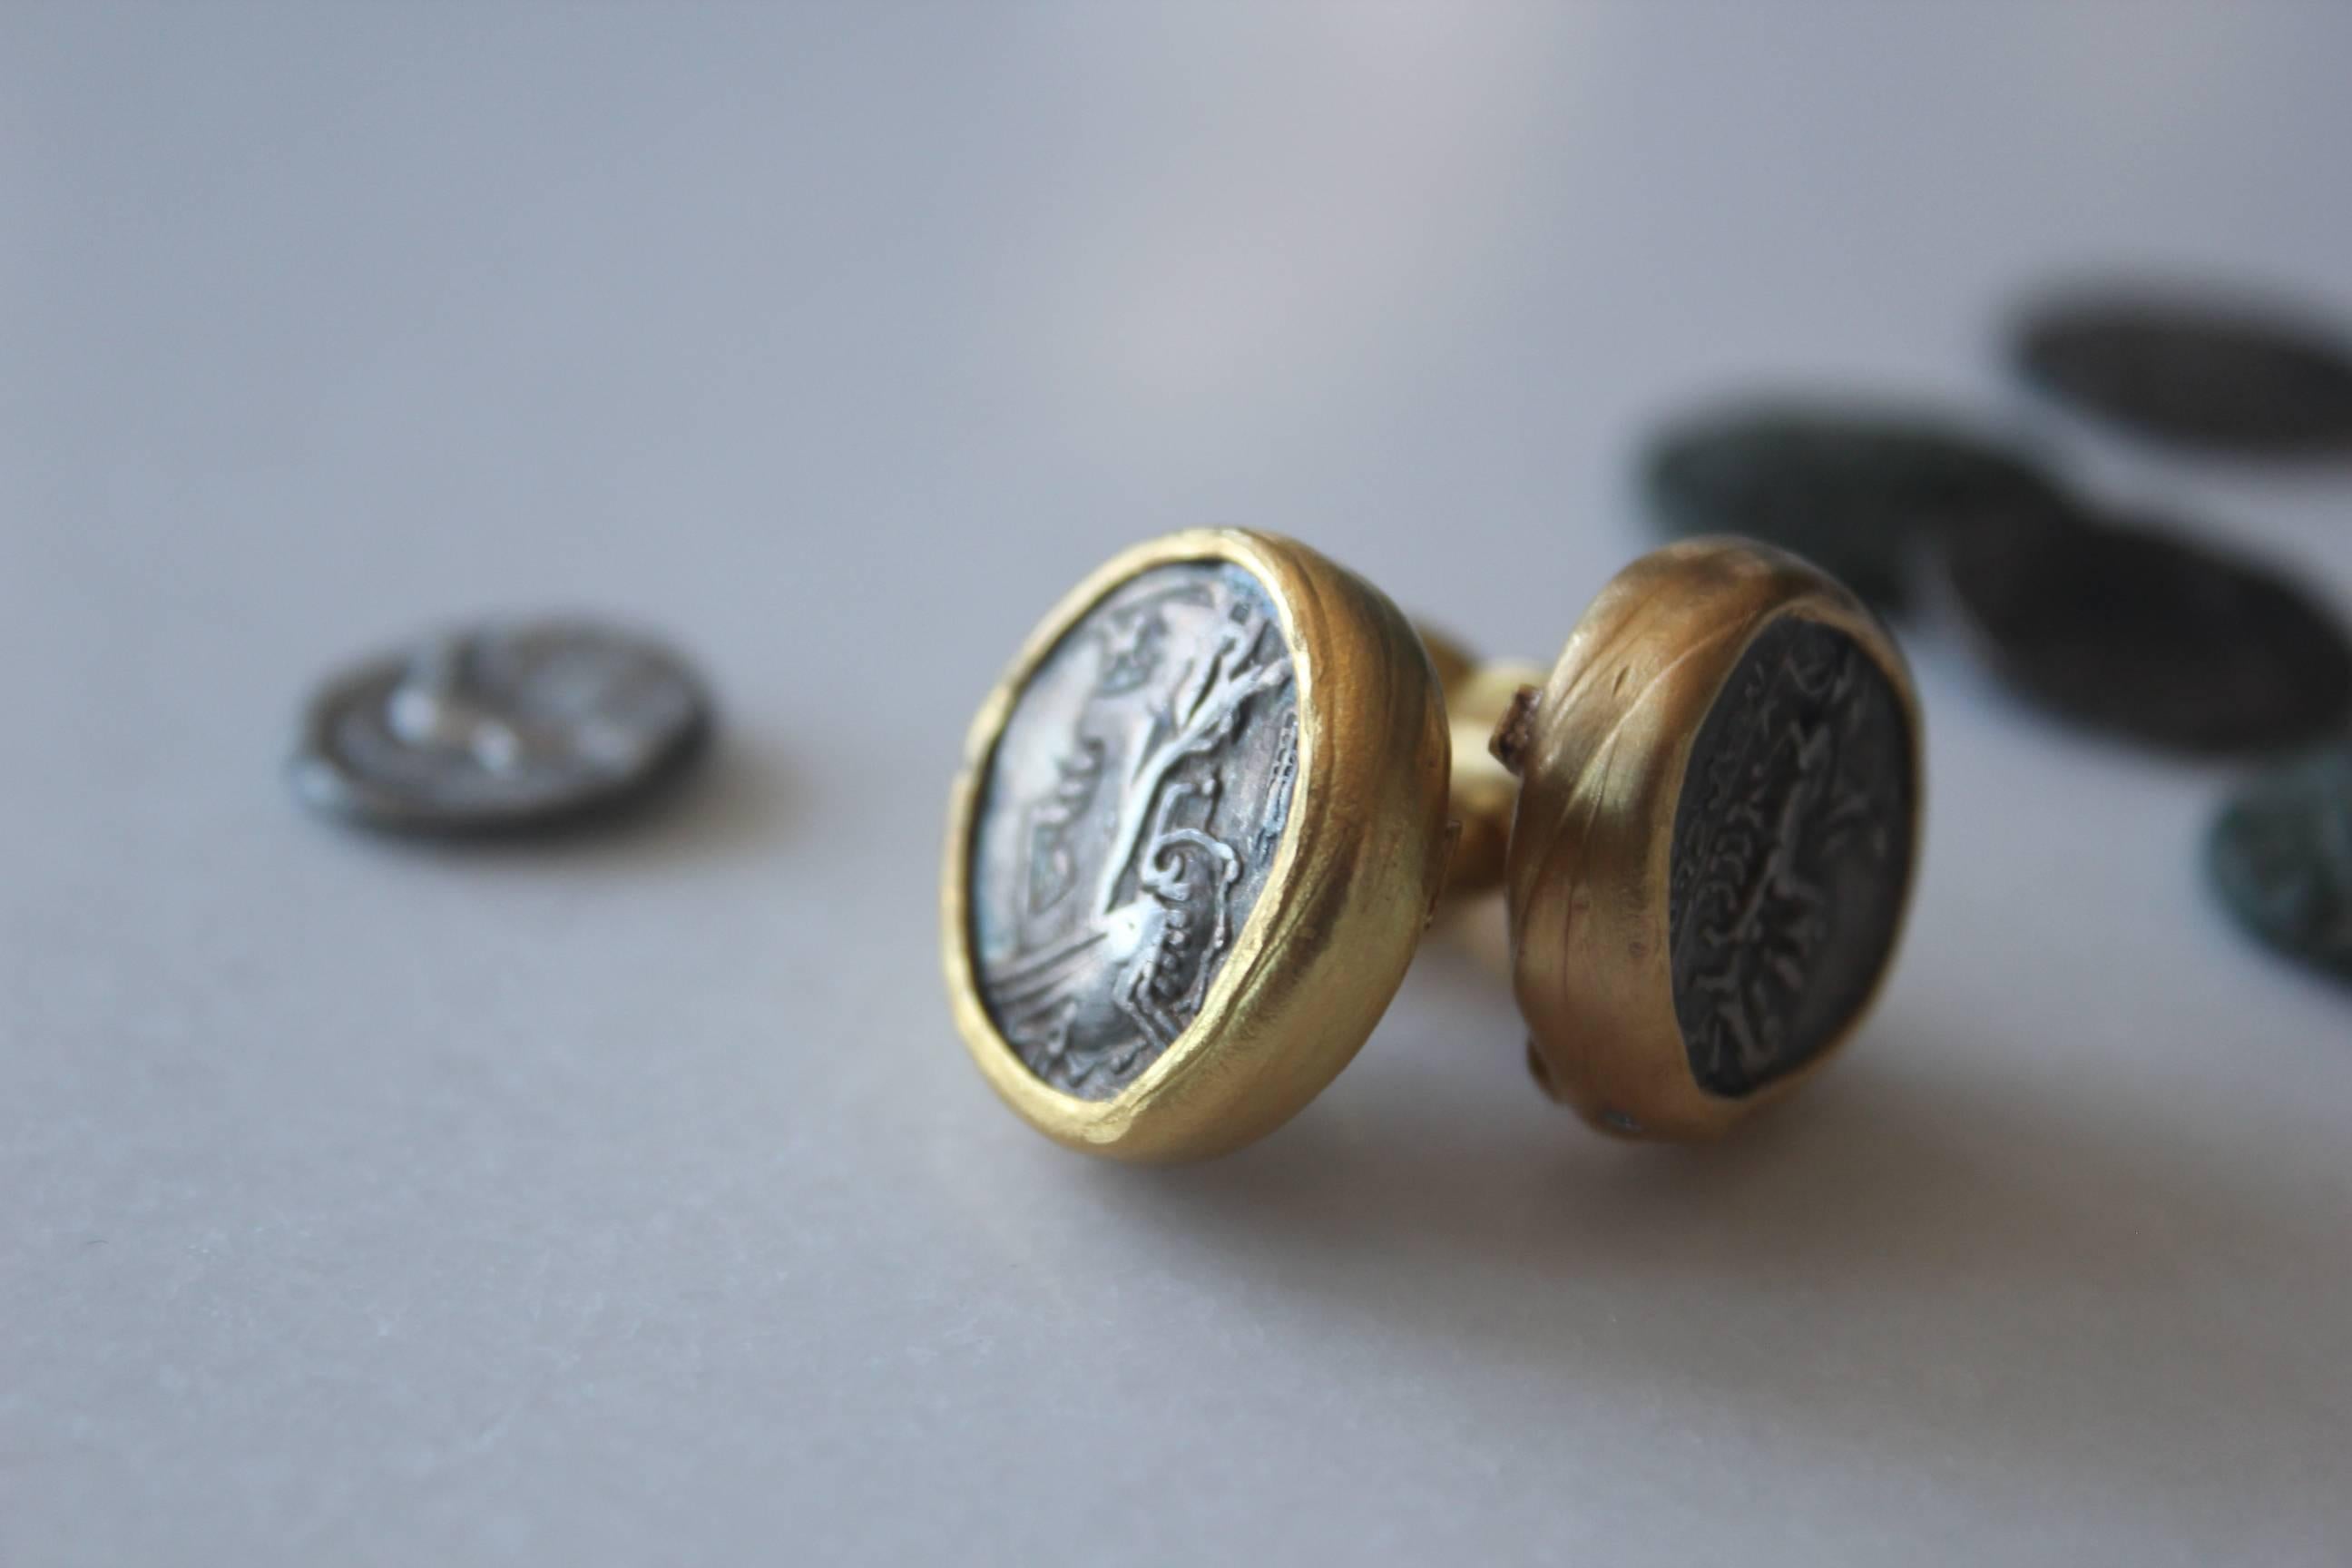 Antique Silver Roman Coin Set in 22K-21K Gold Cuff Links with Diamonds Cufflinks 1